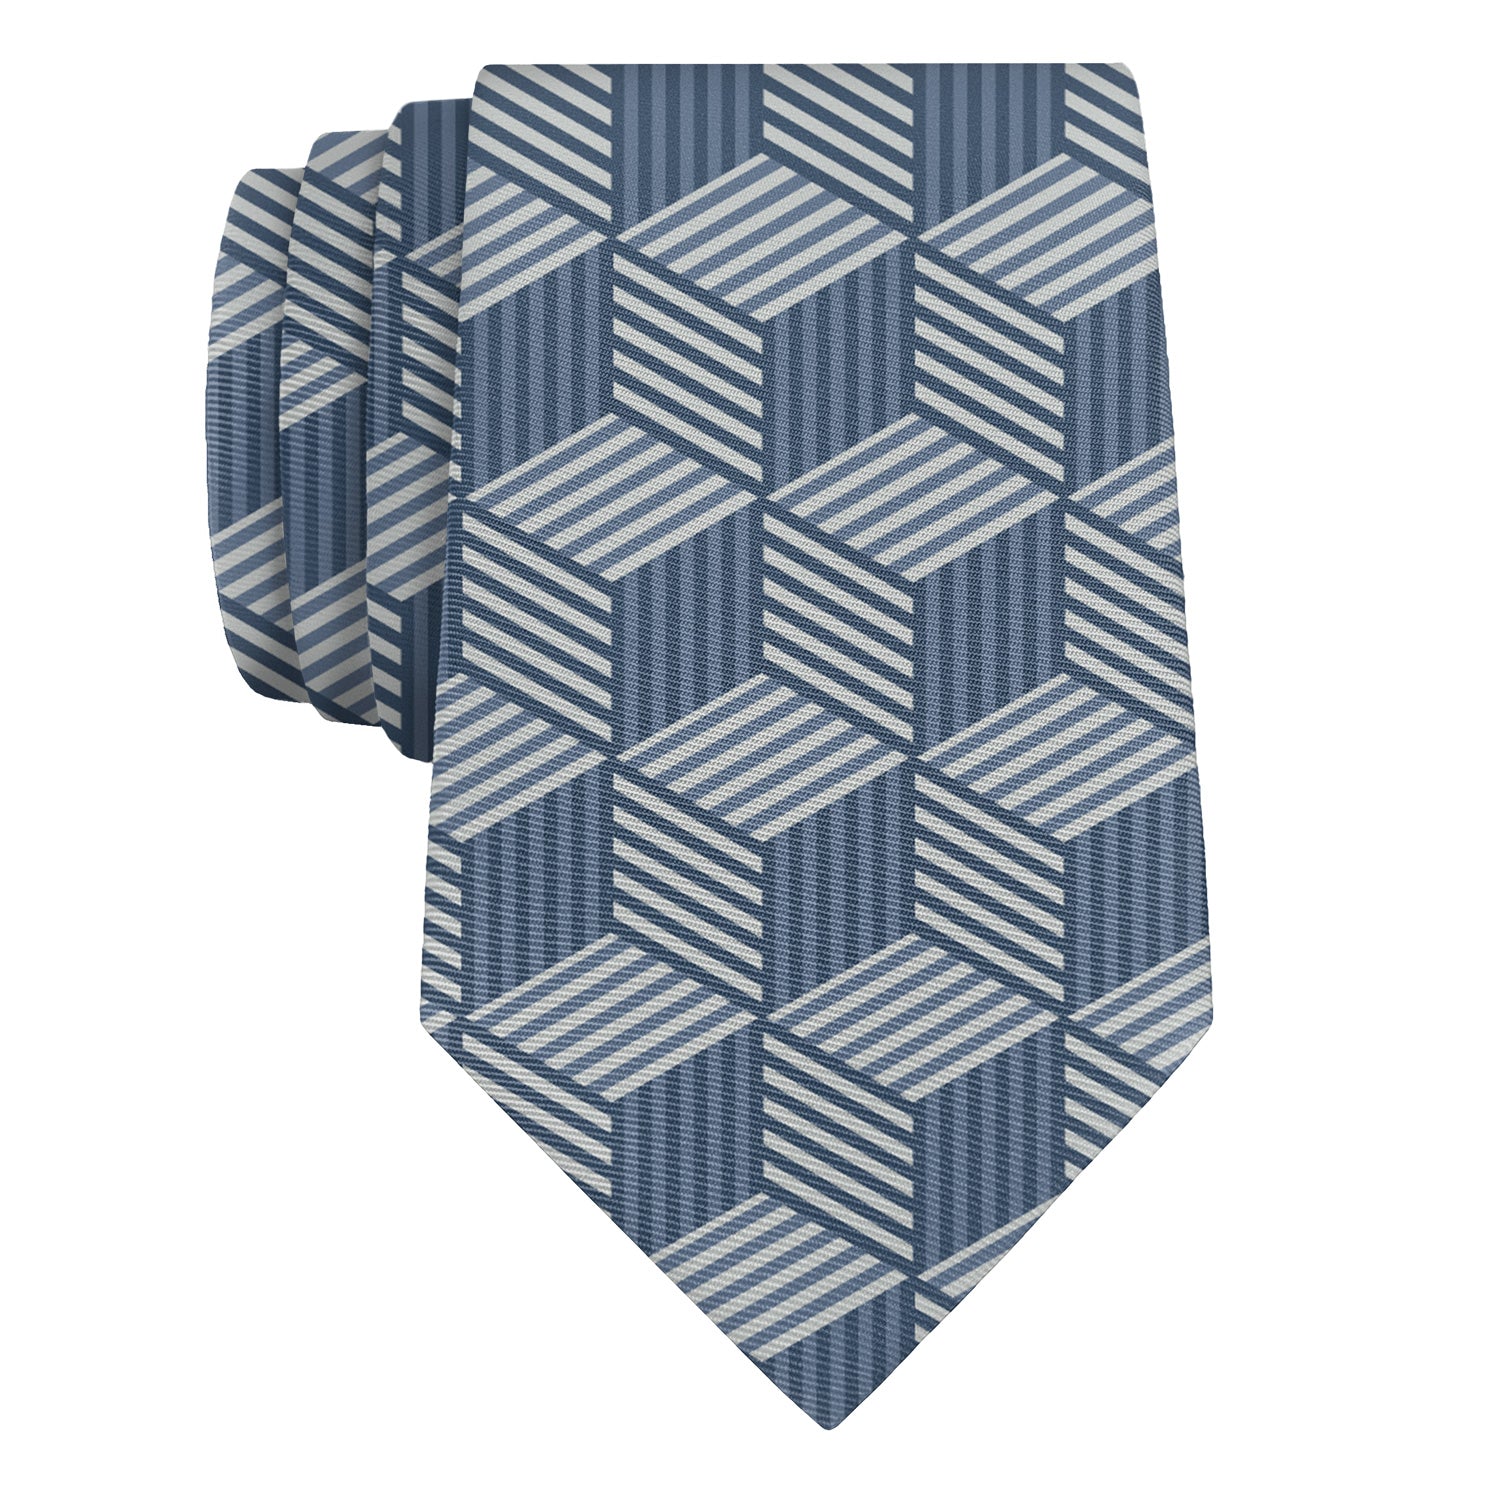 Hexagon Wild Necktie - Knotty 2.75" -  - Knotty Tie Co.